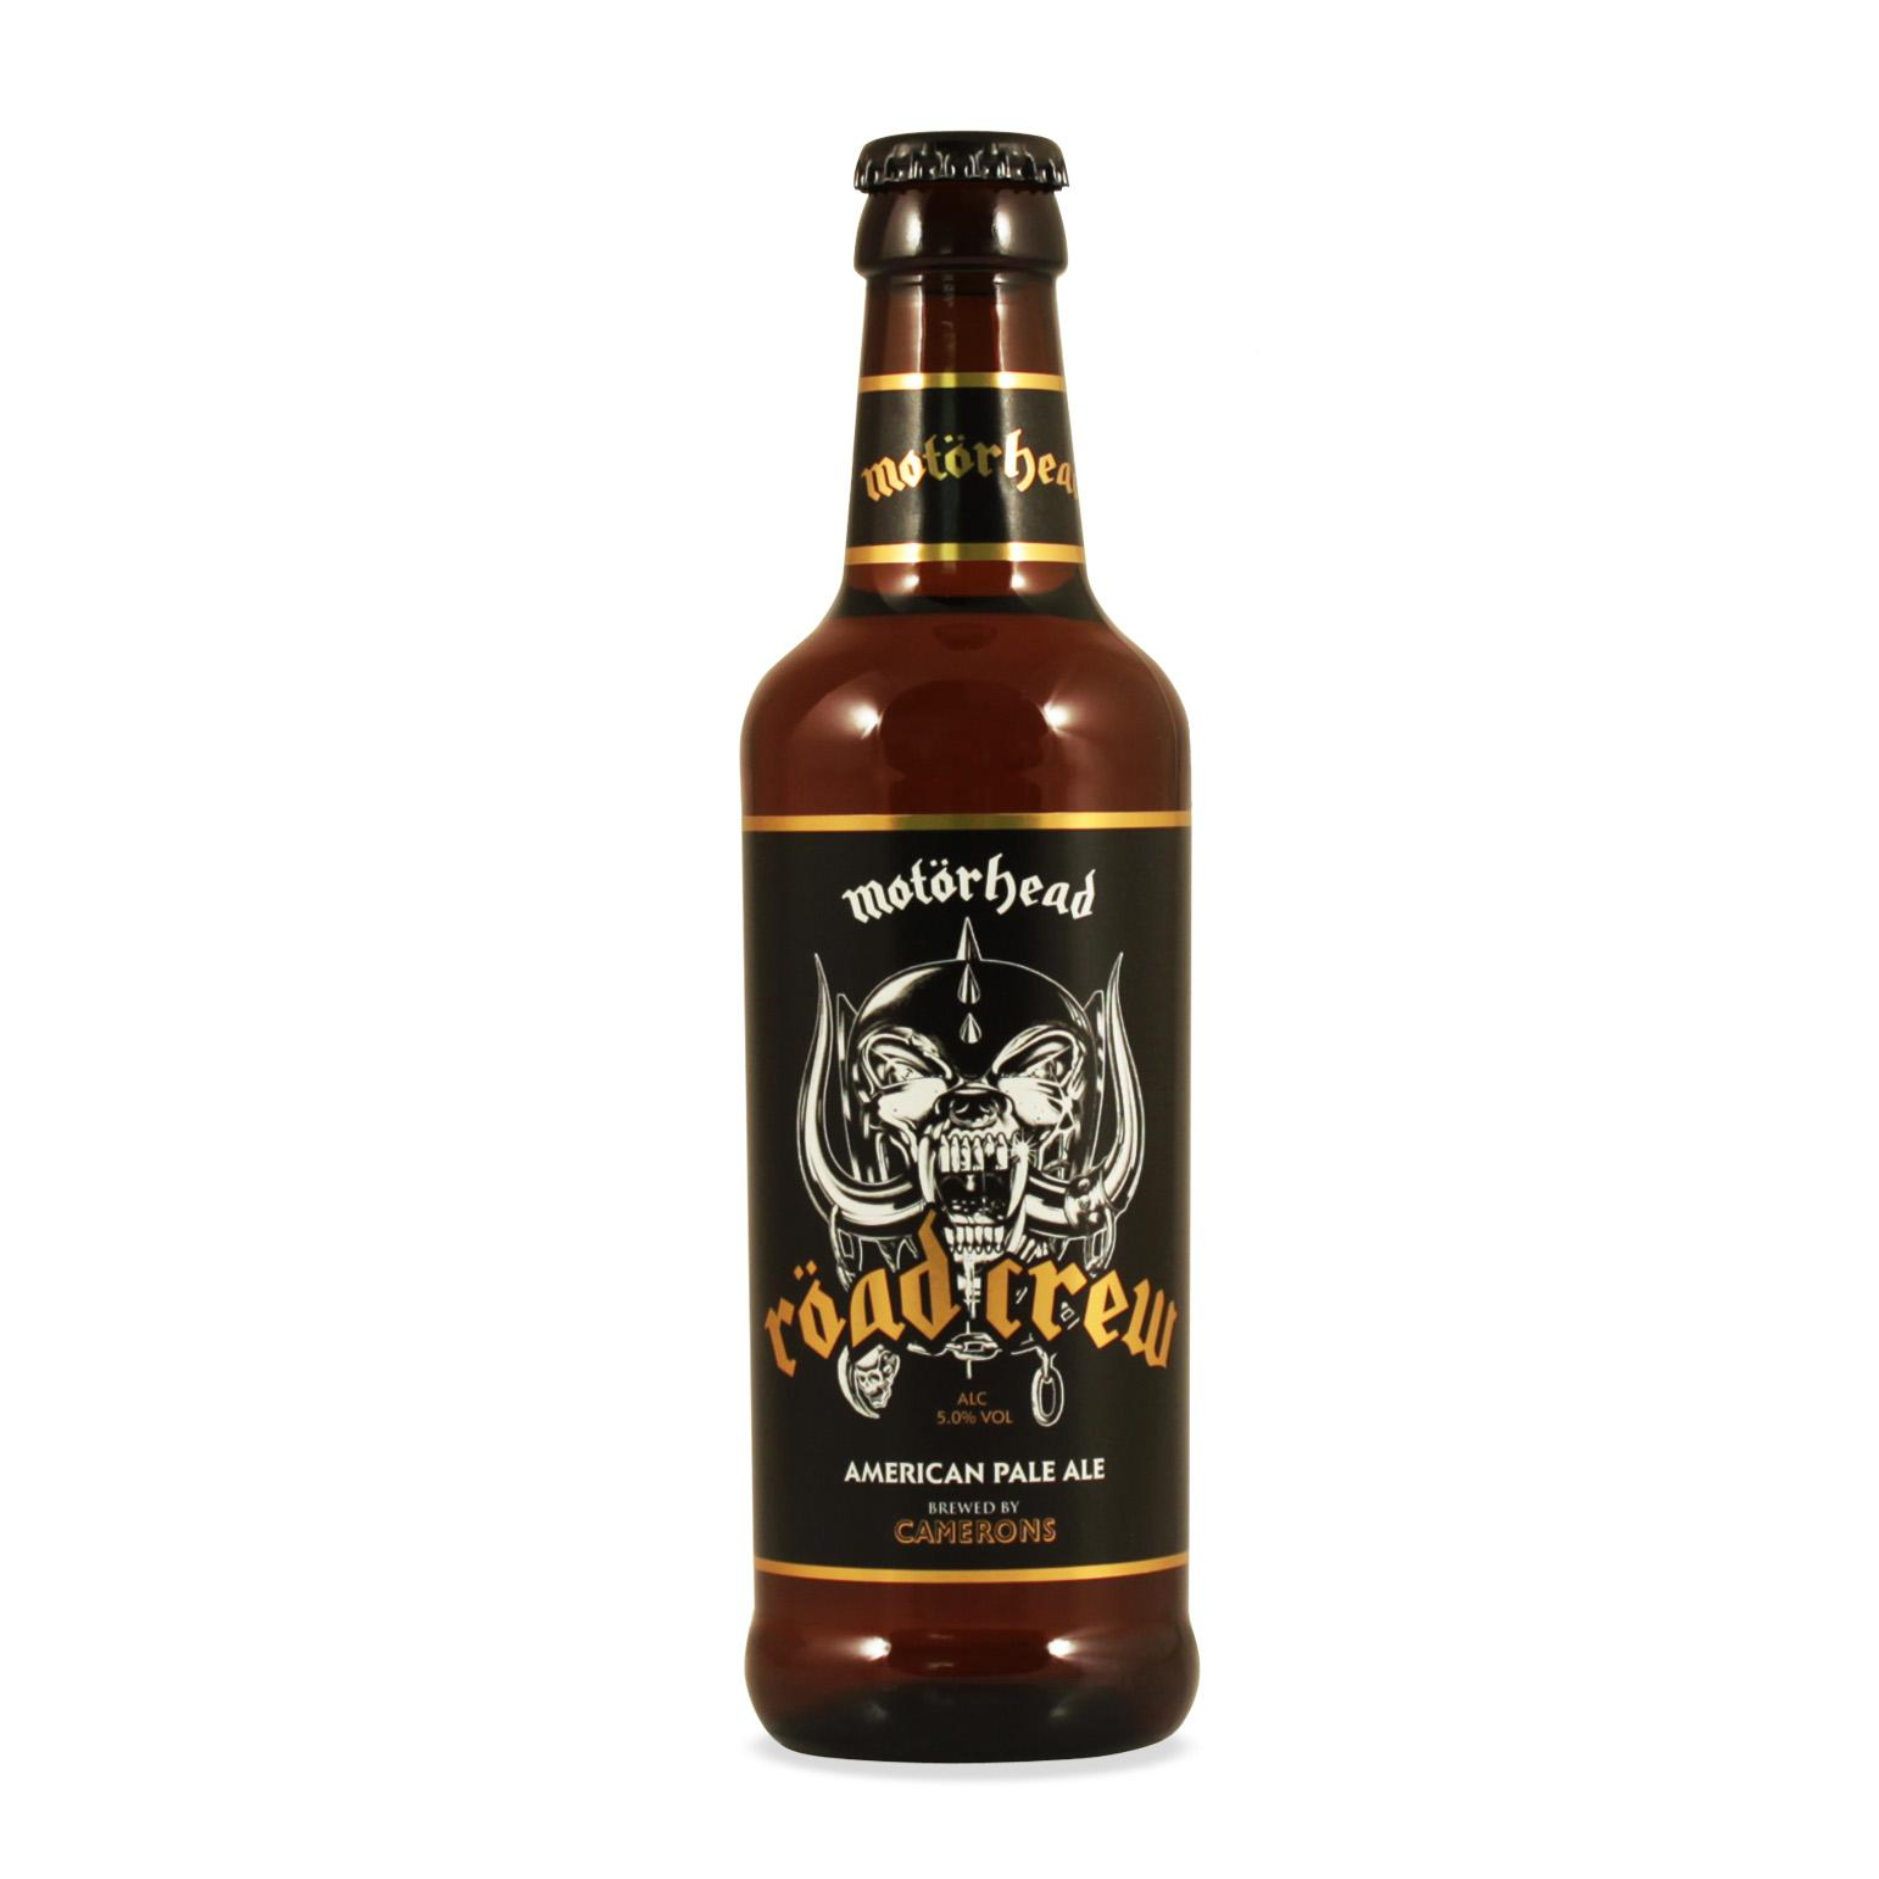 Motörhead Röad Crew American Pale Ale - Untappd 3,61  - Fish & Beer